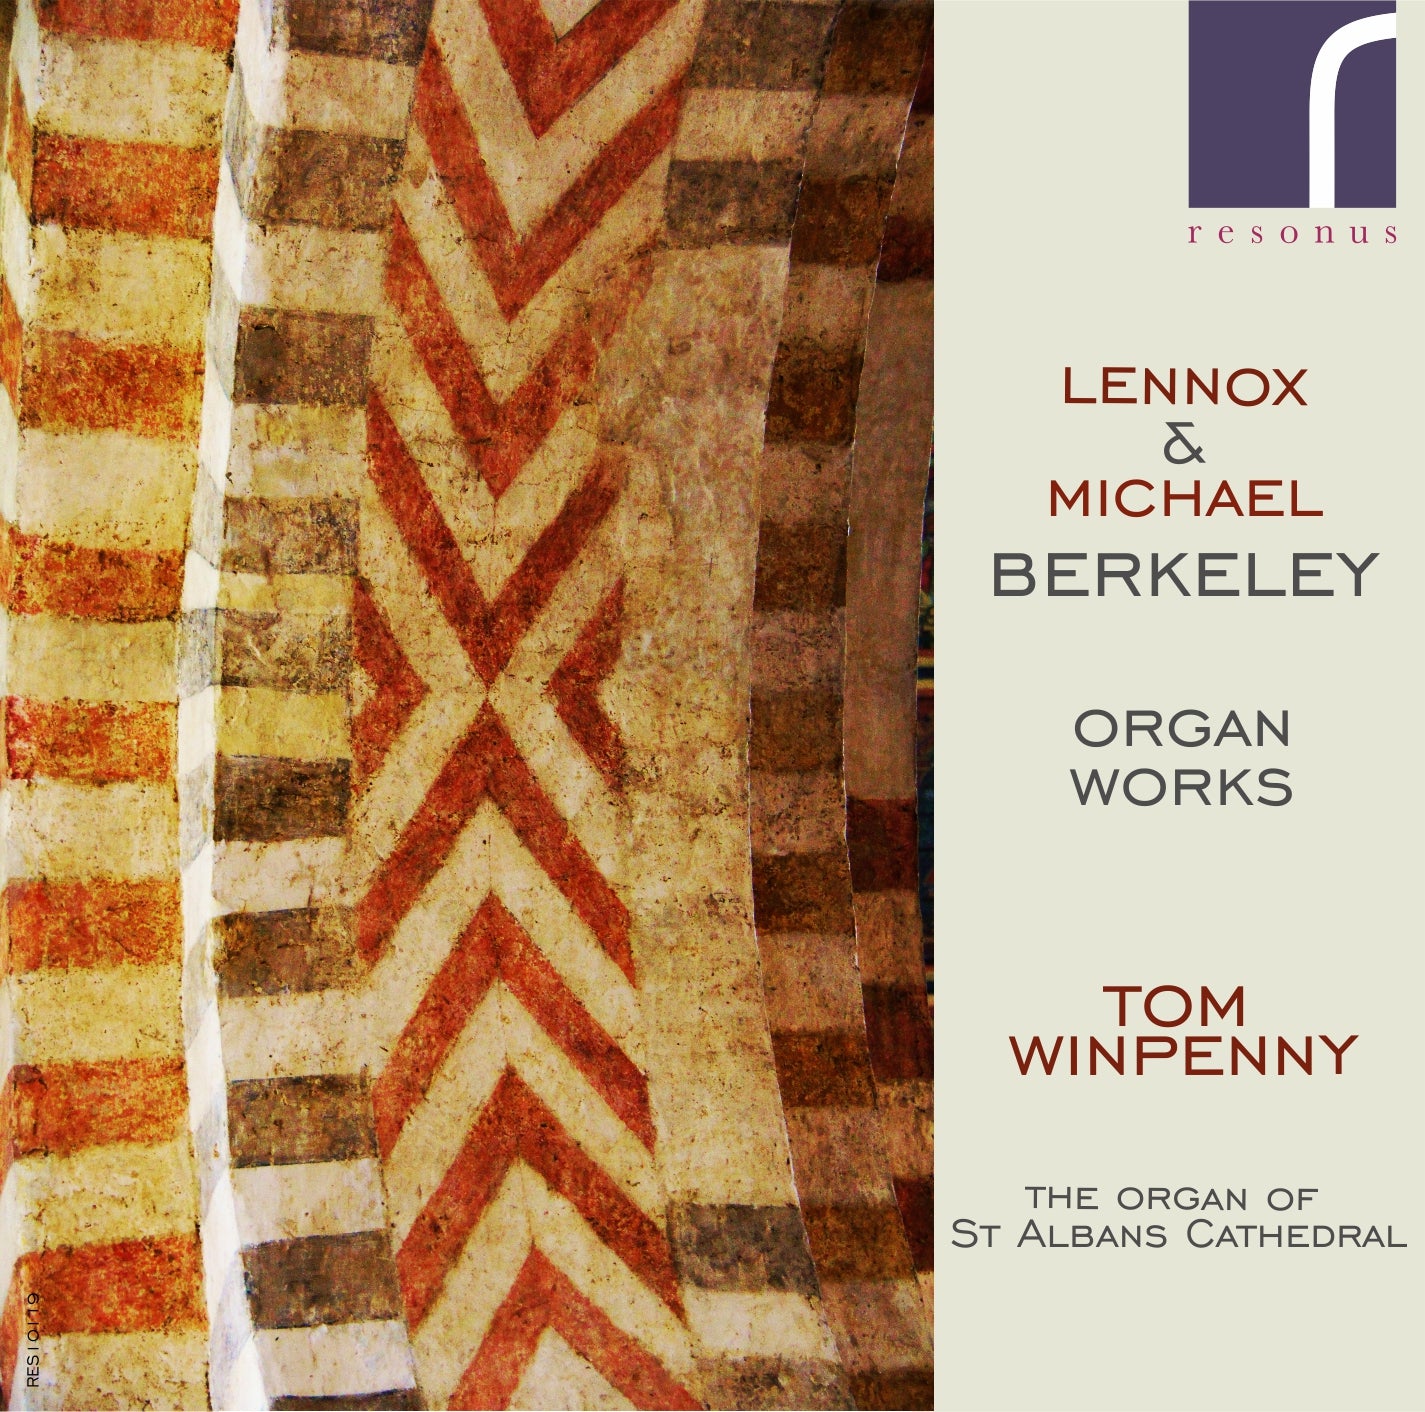 Lennox & Michael Berkeley: Organ Works